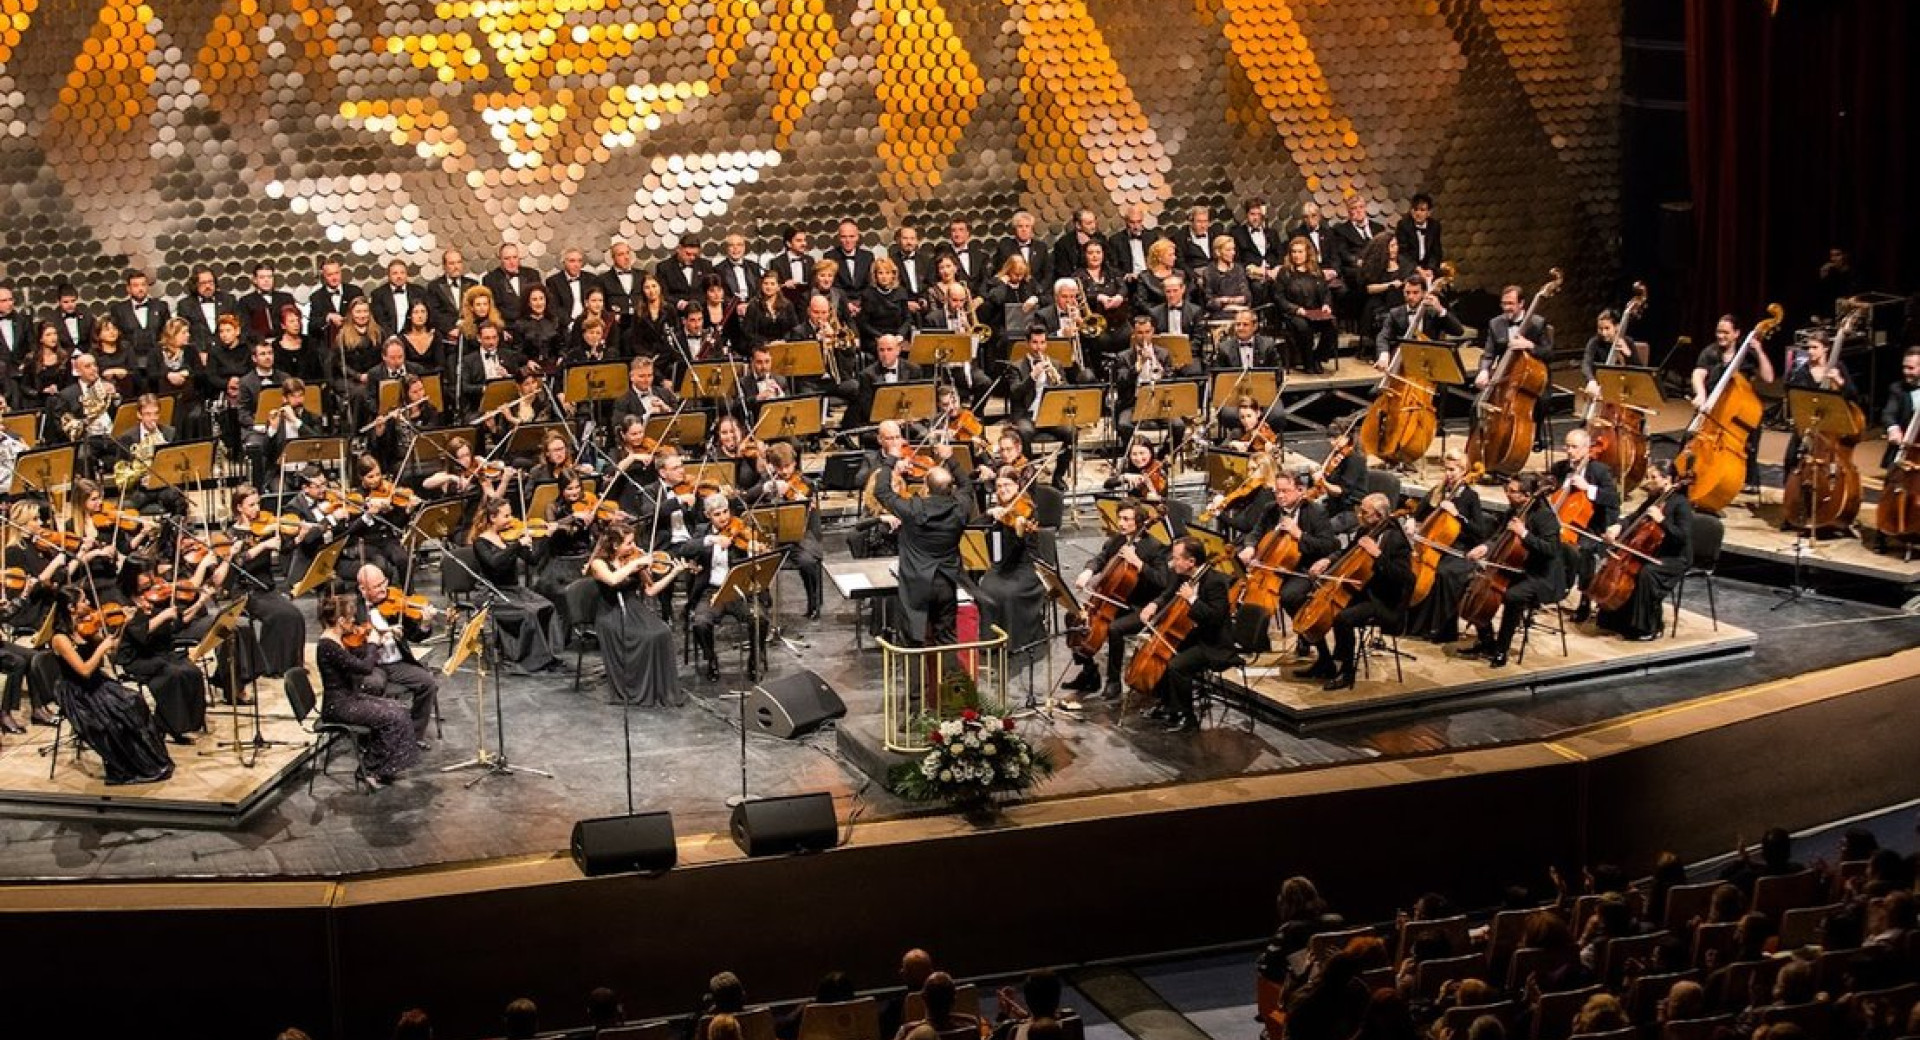 Orkester Sofijske filharmonije resized